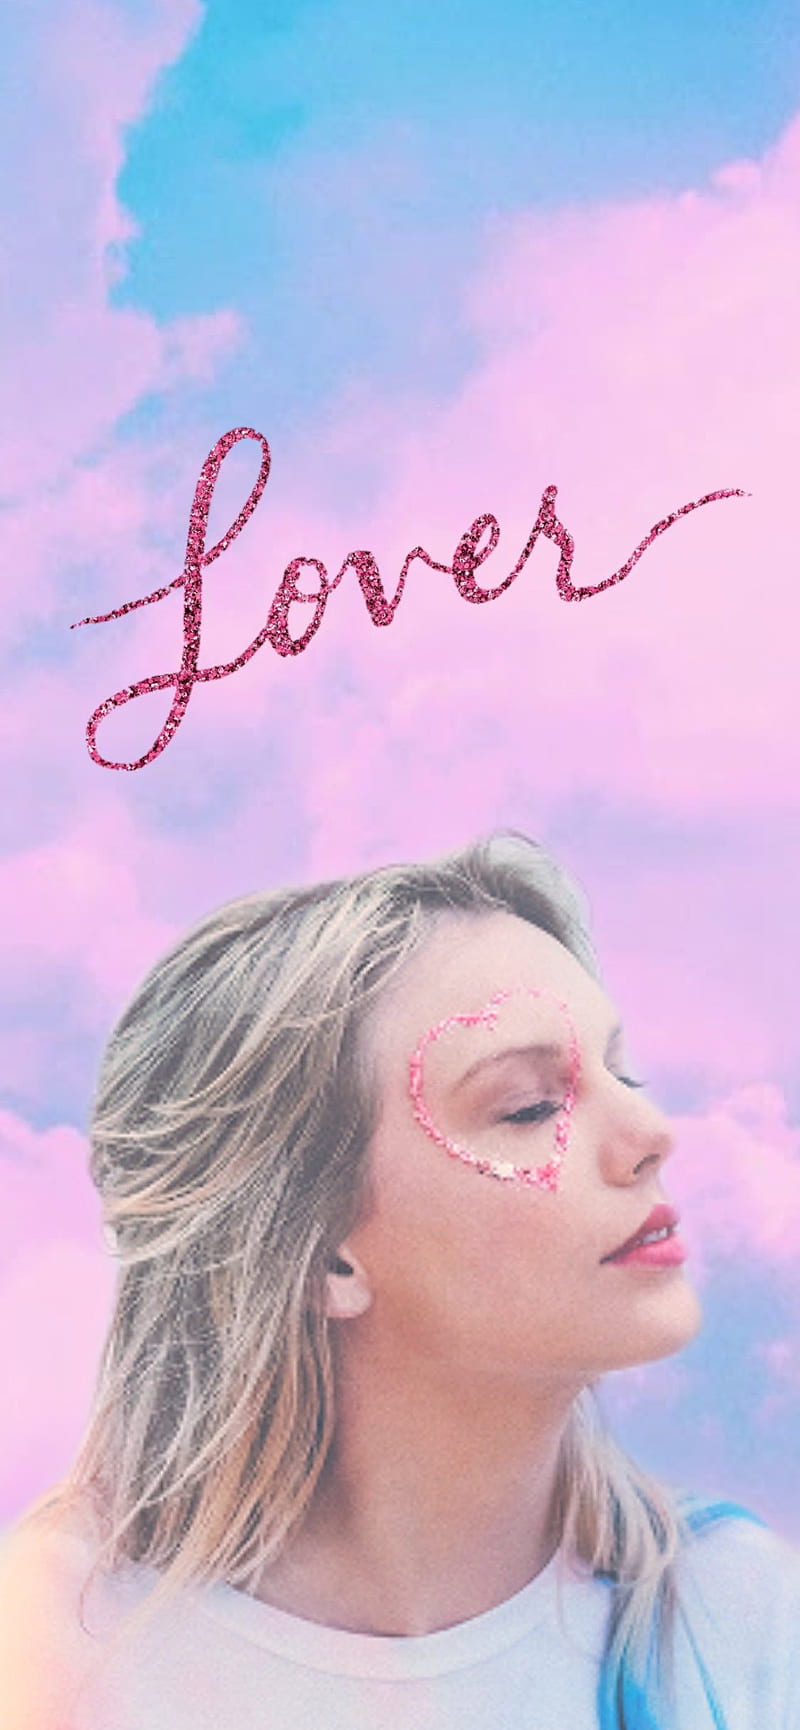 Lover Album Background Taylor Swift